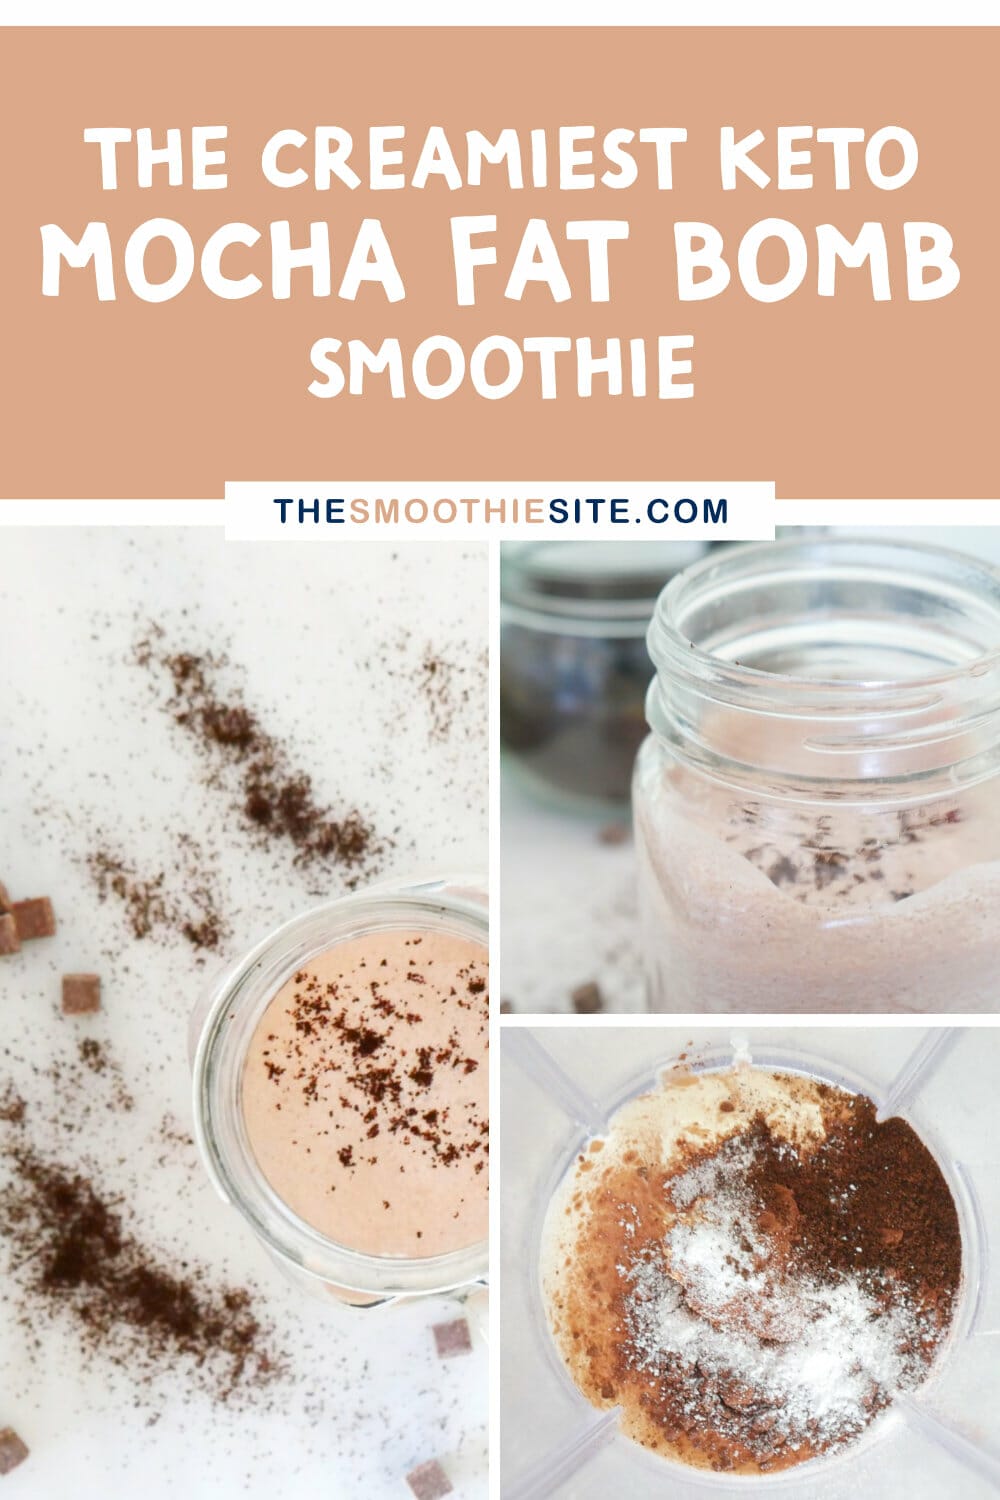 Deliciously creamy Keto mocha fat bomb smoothie via @thesmoothiesite